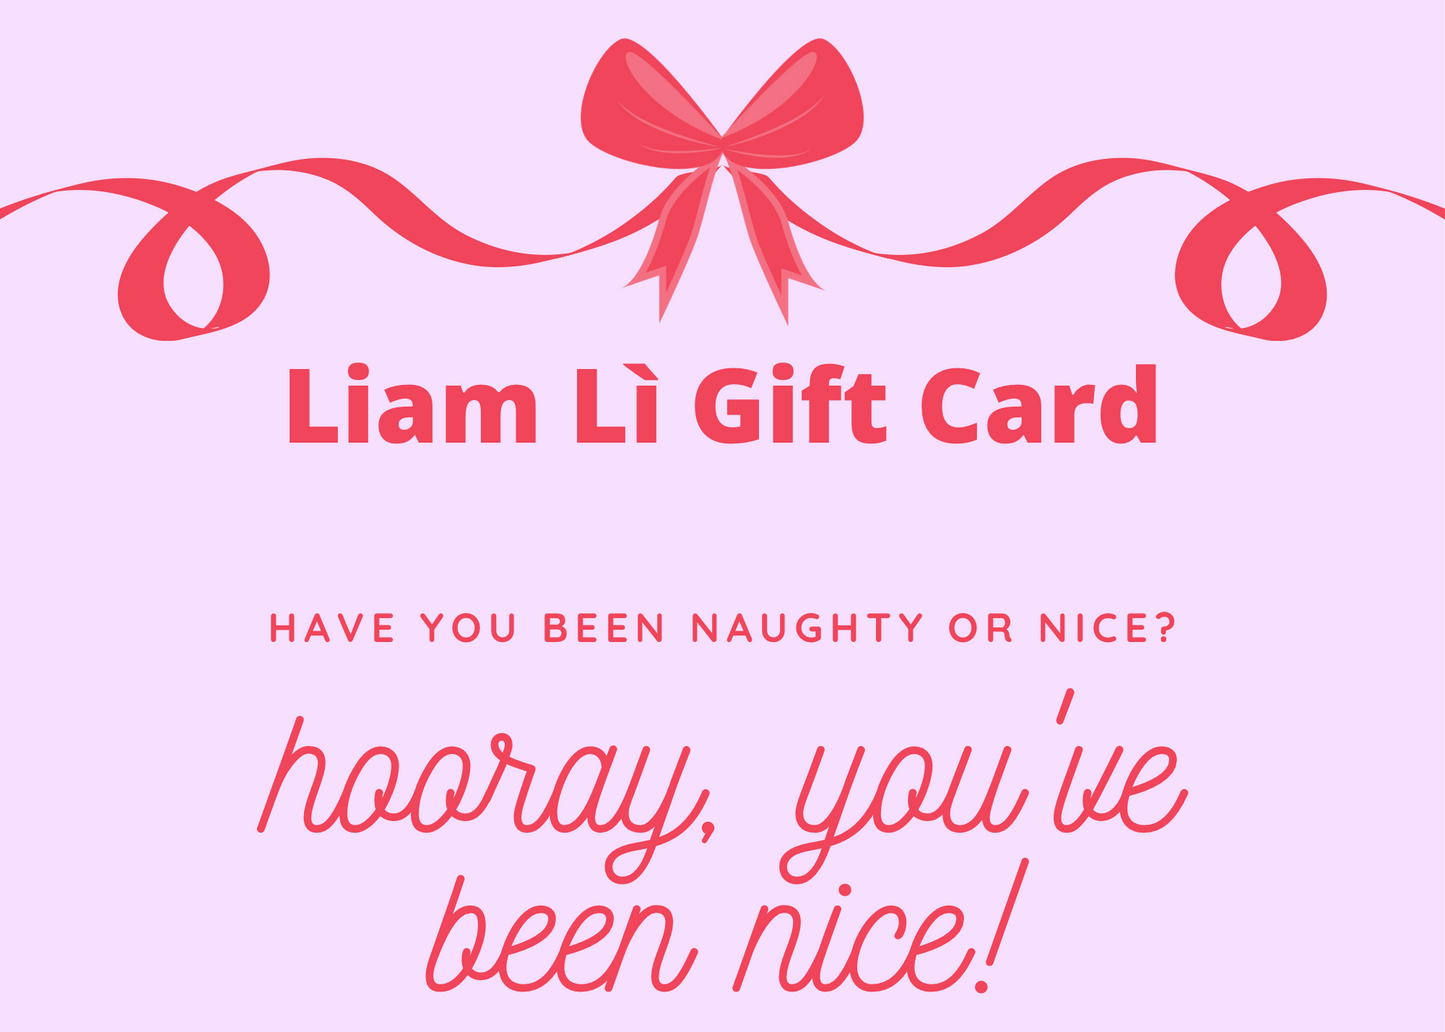 Liam Li Gift Card